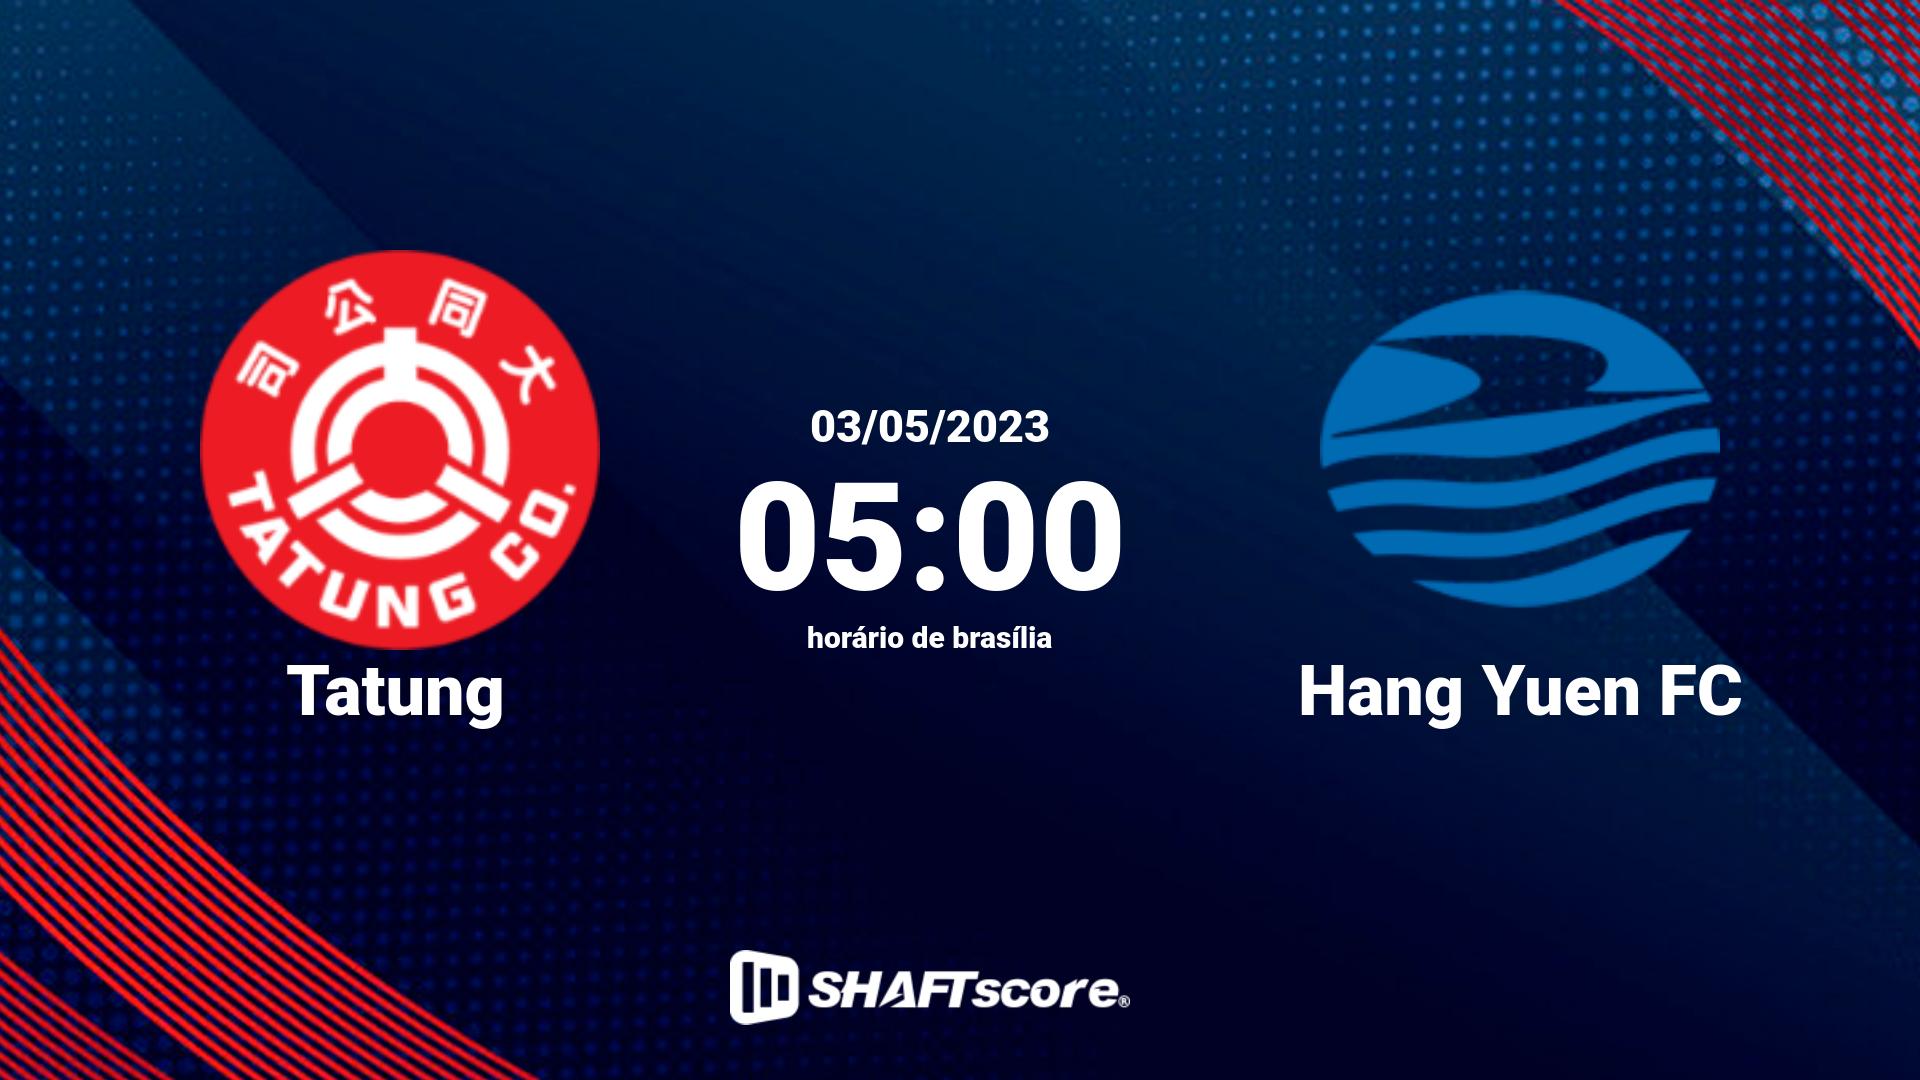 Estatísticas do jogo Tatung vs Hang Yuen FC 03.05 05:00